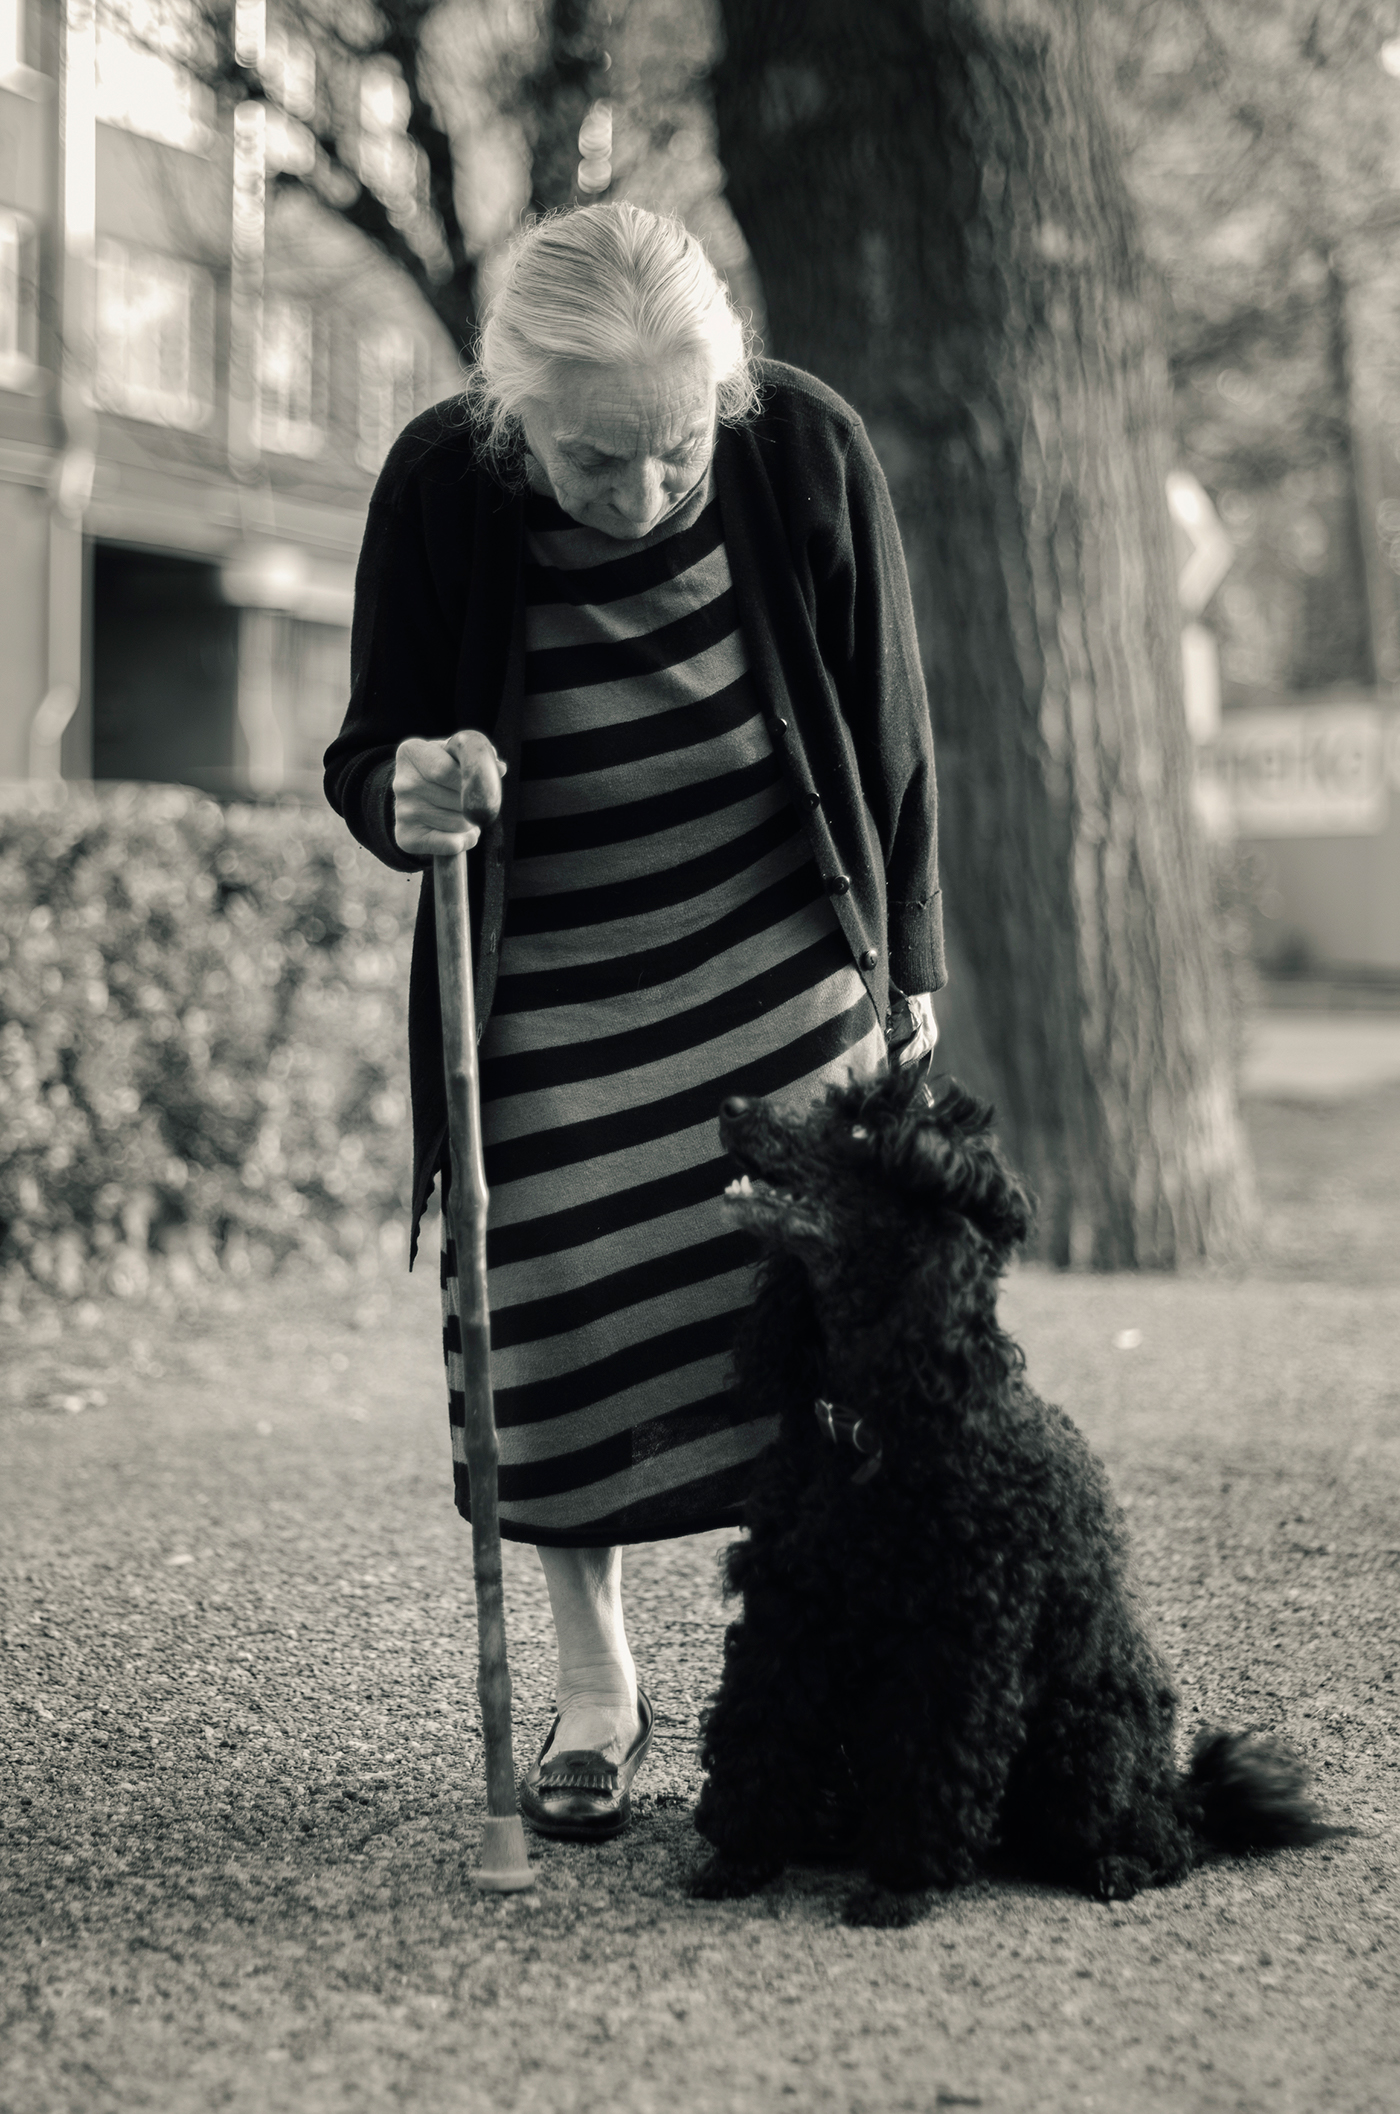 Adobe Portfolio resistance cosmosys old lady dog portrait Tallinn black and white black dog inspire